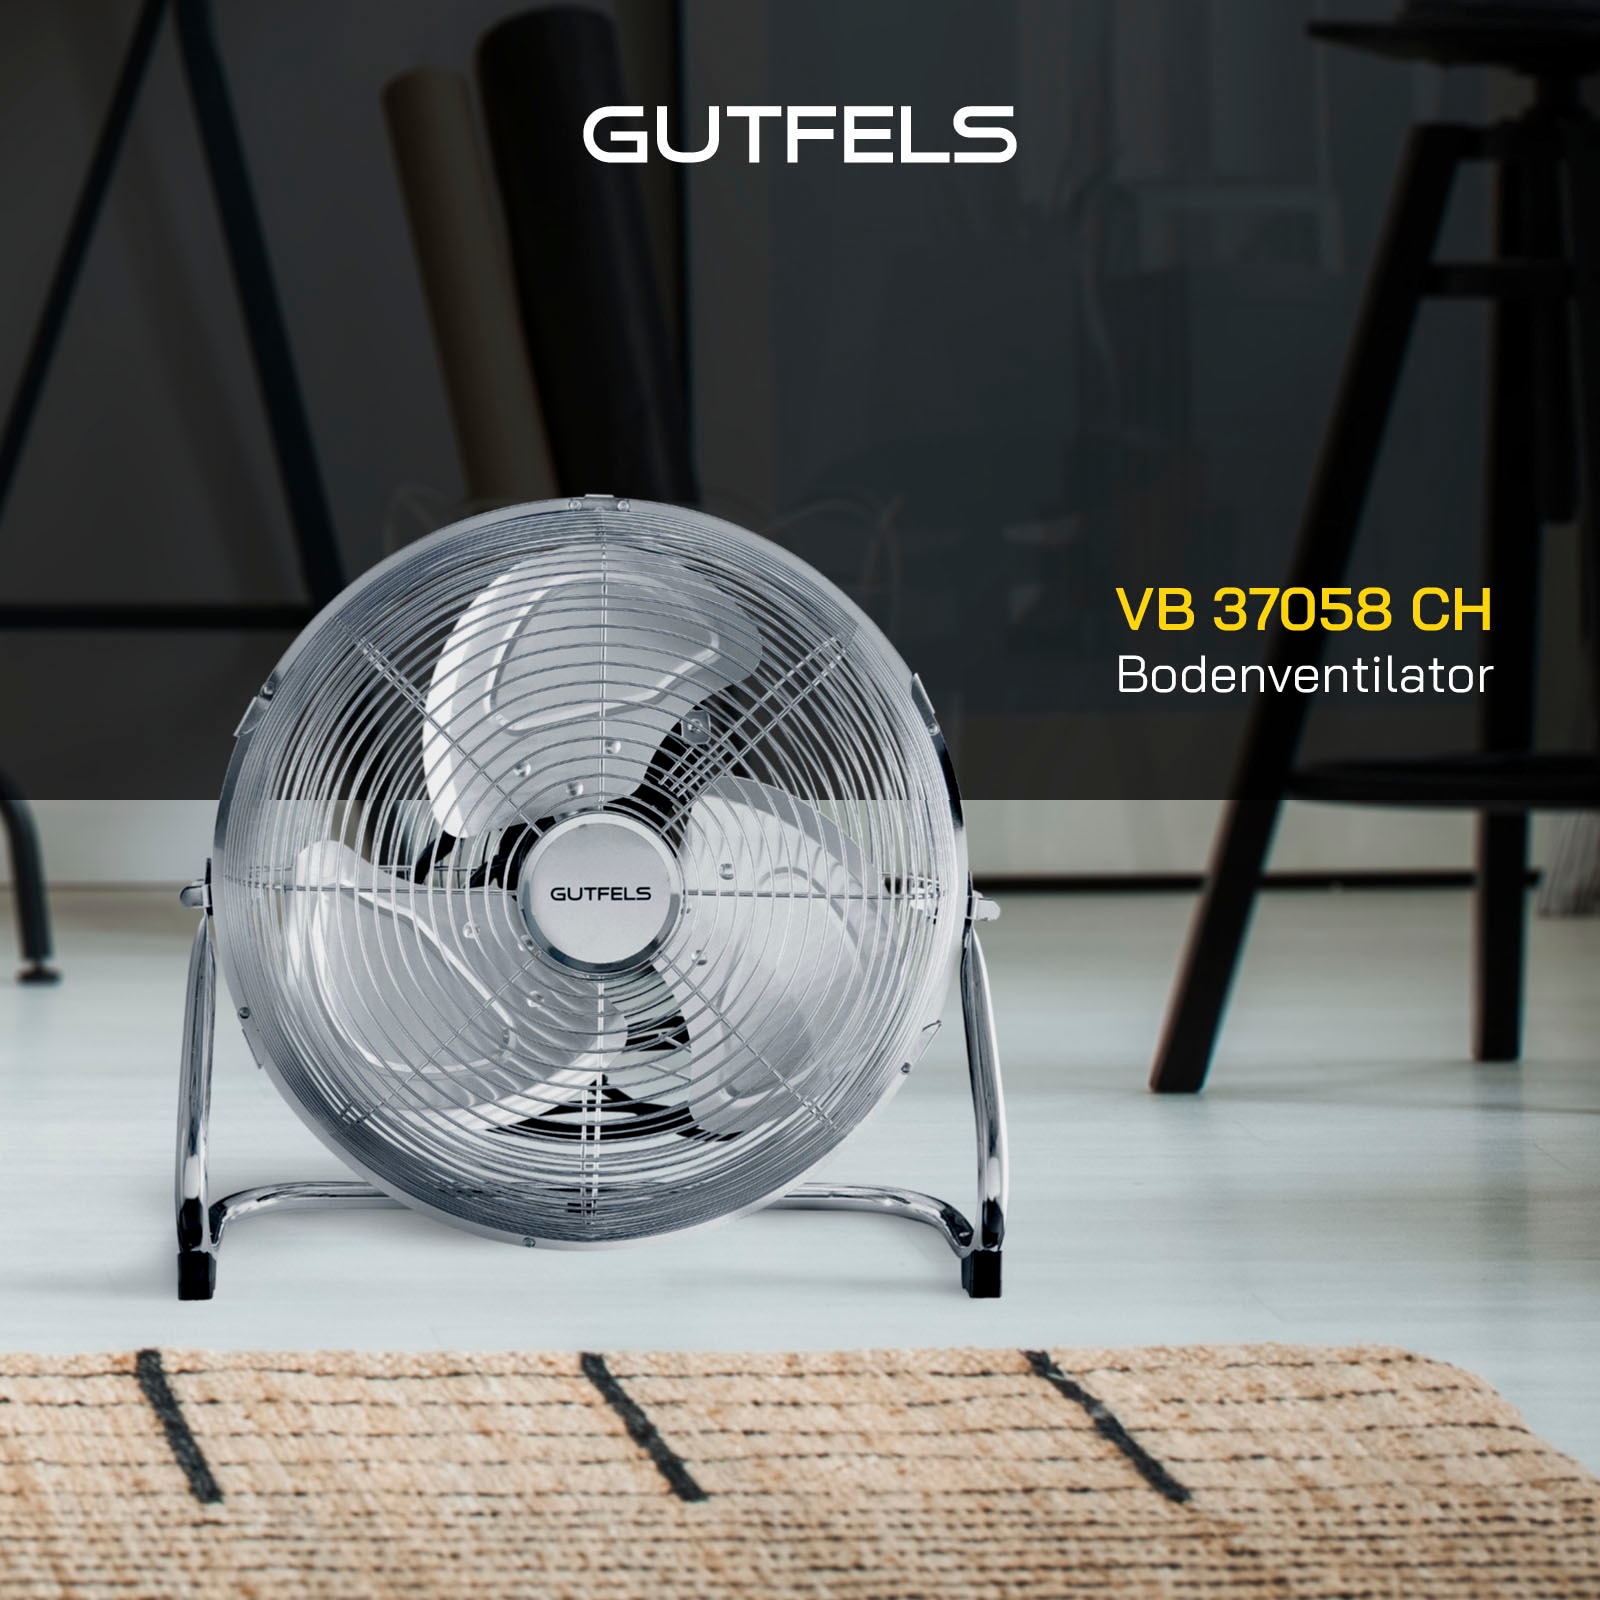 Gutfels Bodenventilator »VB 37058 ch«, Ø 35 cm, Vollmetall, 70 W Leistung, edelstahlfarben